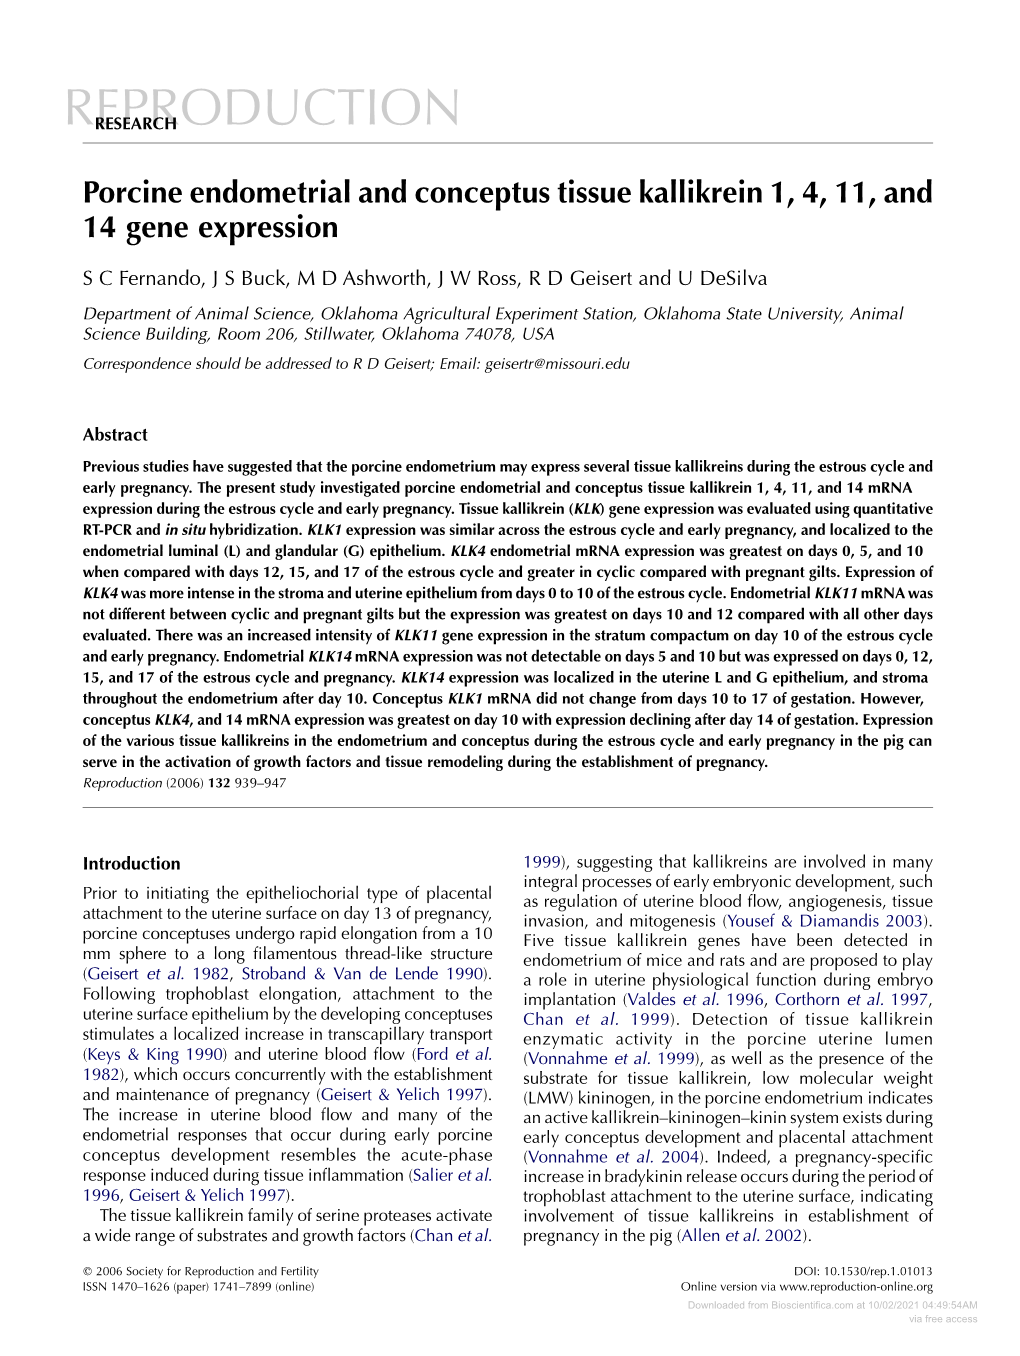 Porcine Endometrial and Conceptus Tissue Kallikrein 1, 4, 11, and 14 Gene Expression